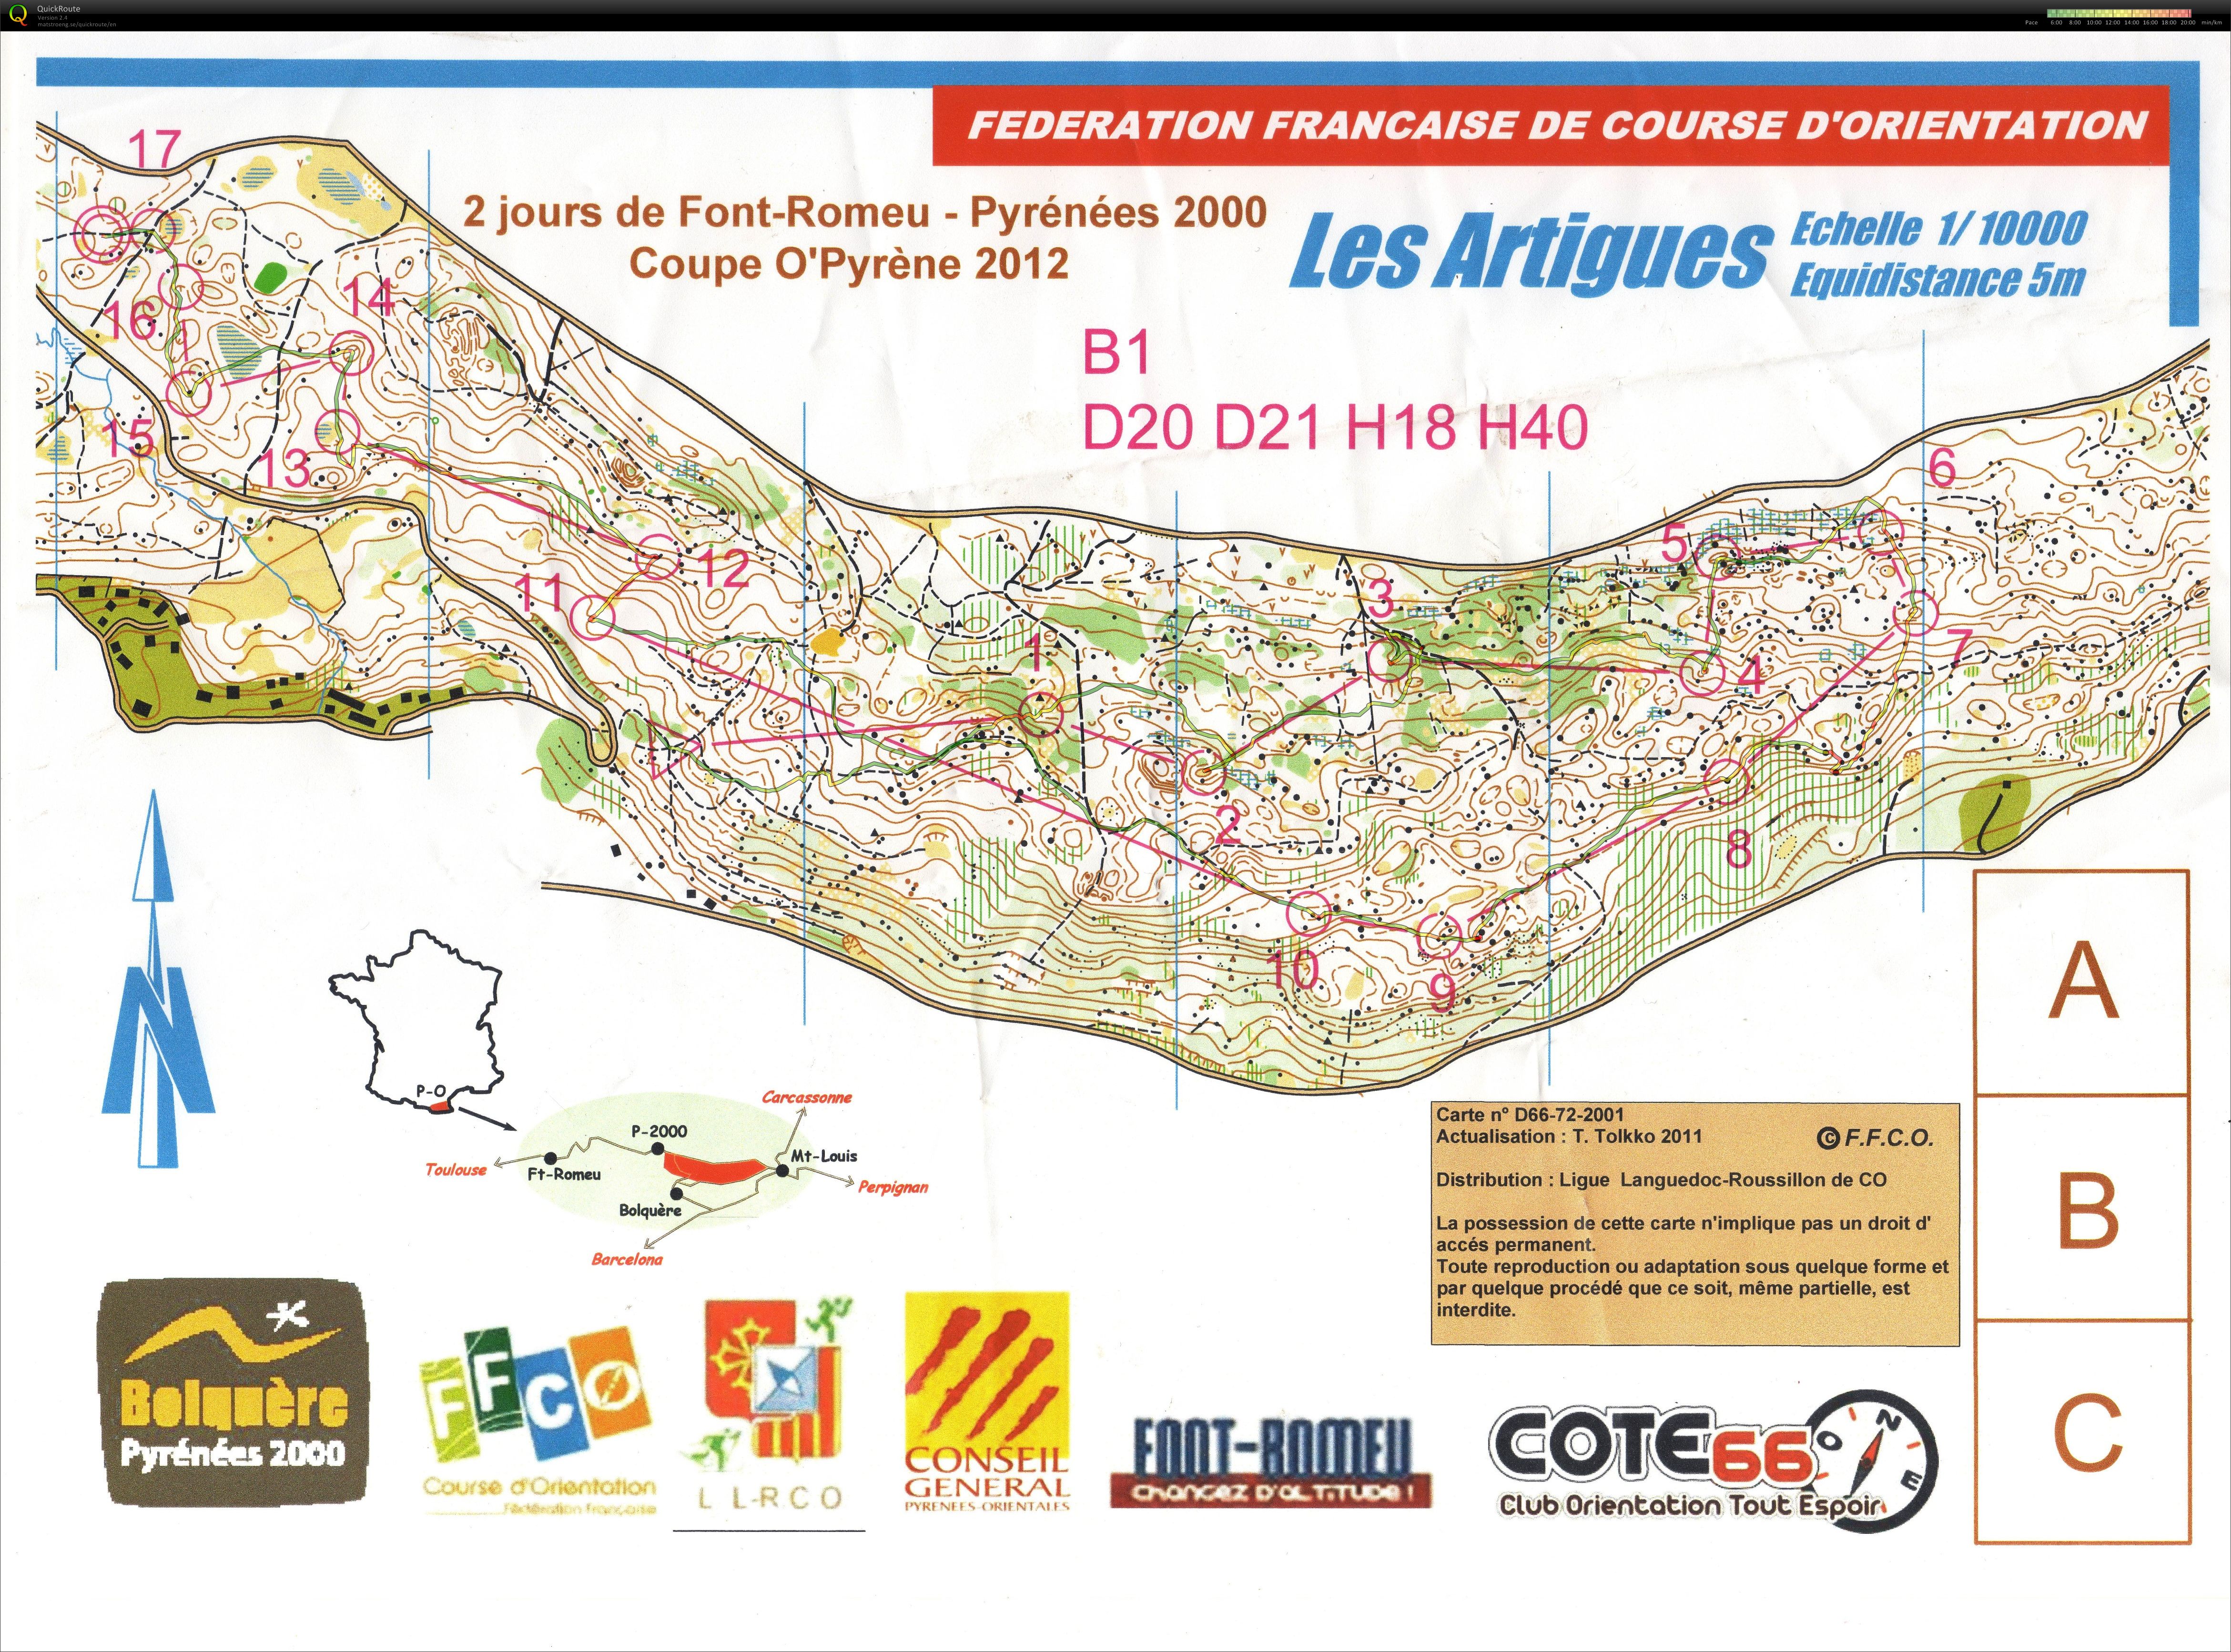 O'Pyrene 2 jours de Font Romeu - Pyrénées 2000 (02-09-2012)